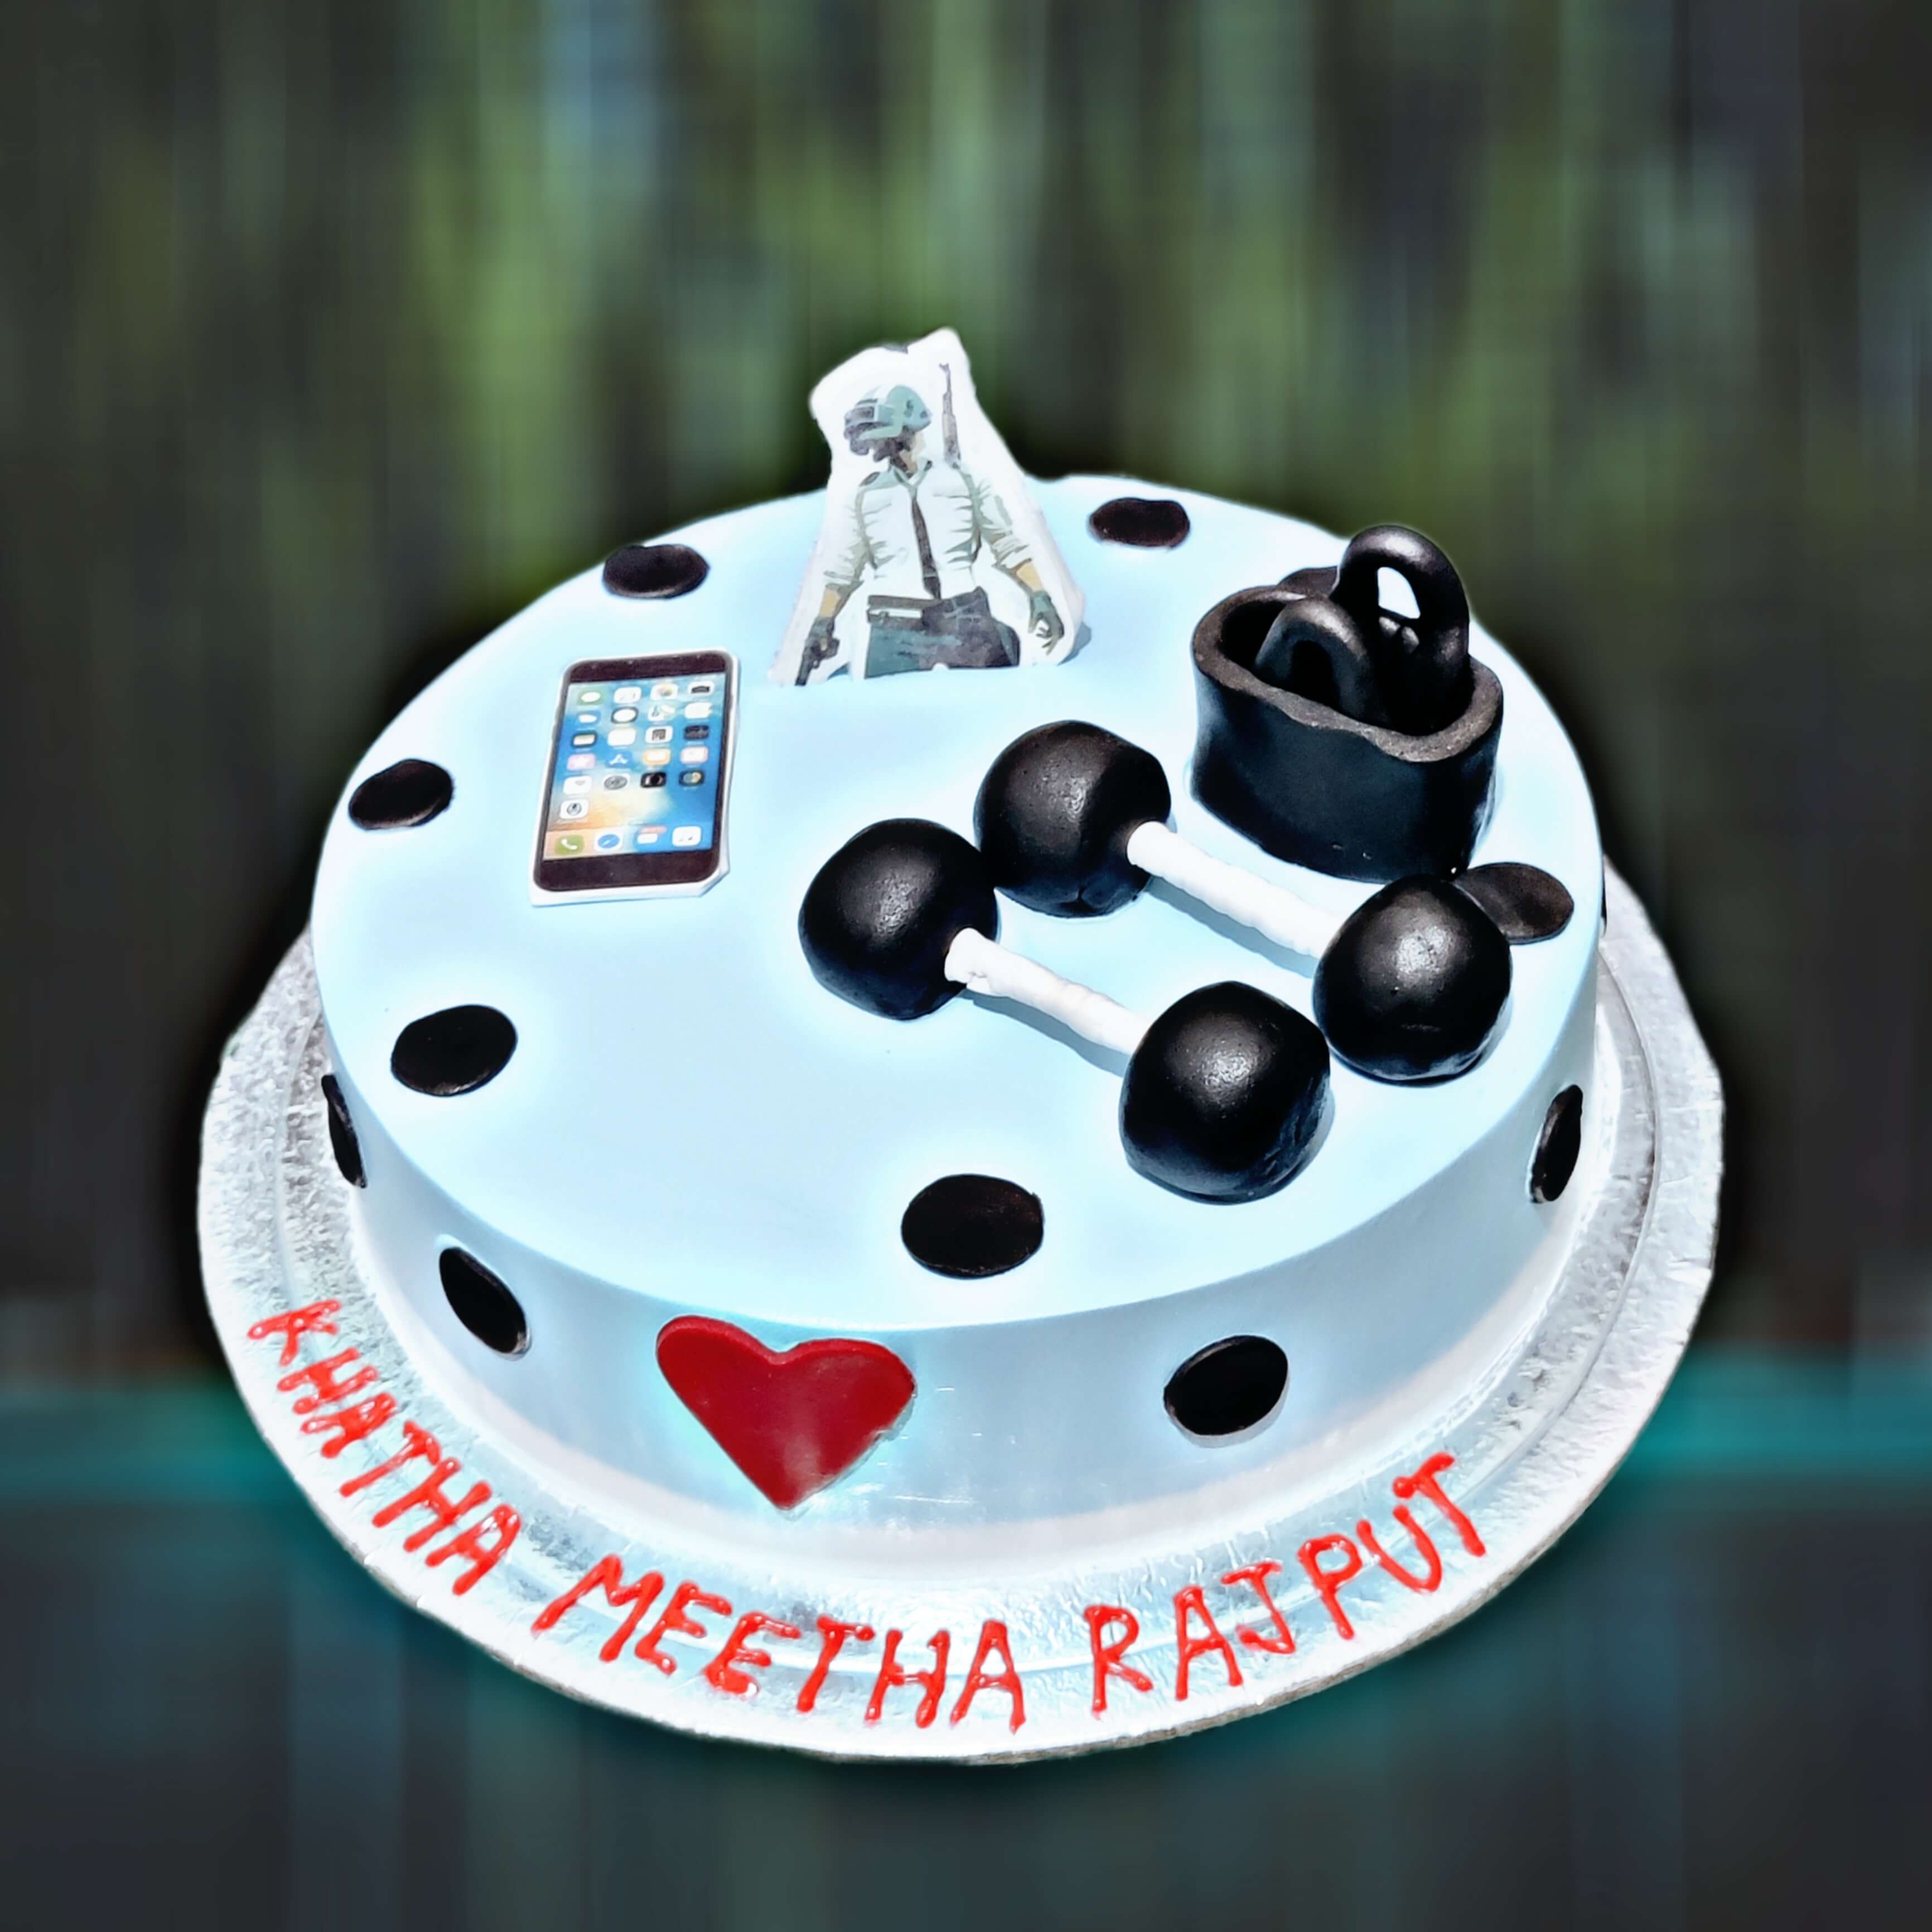 PUBG Themed Birthday Cake